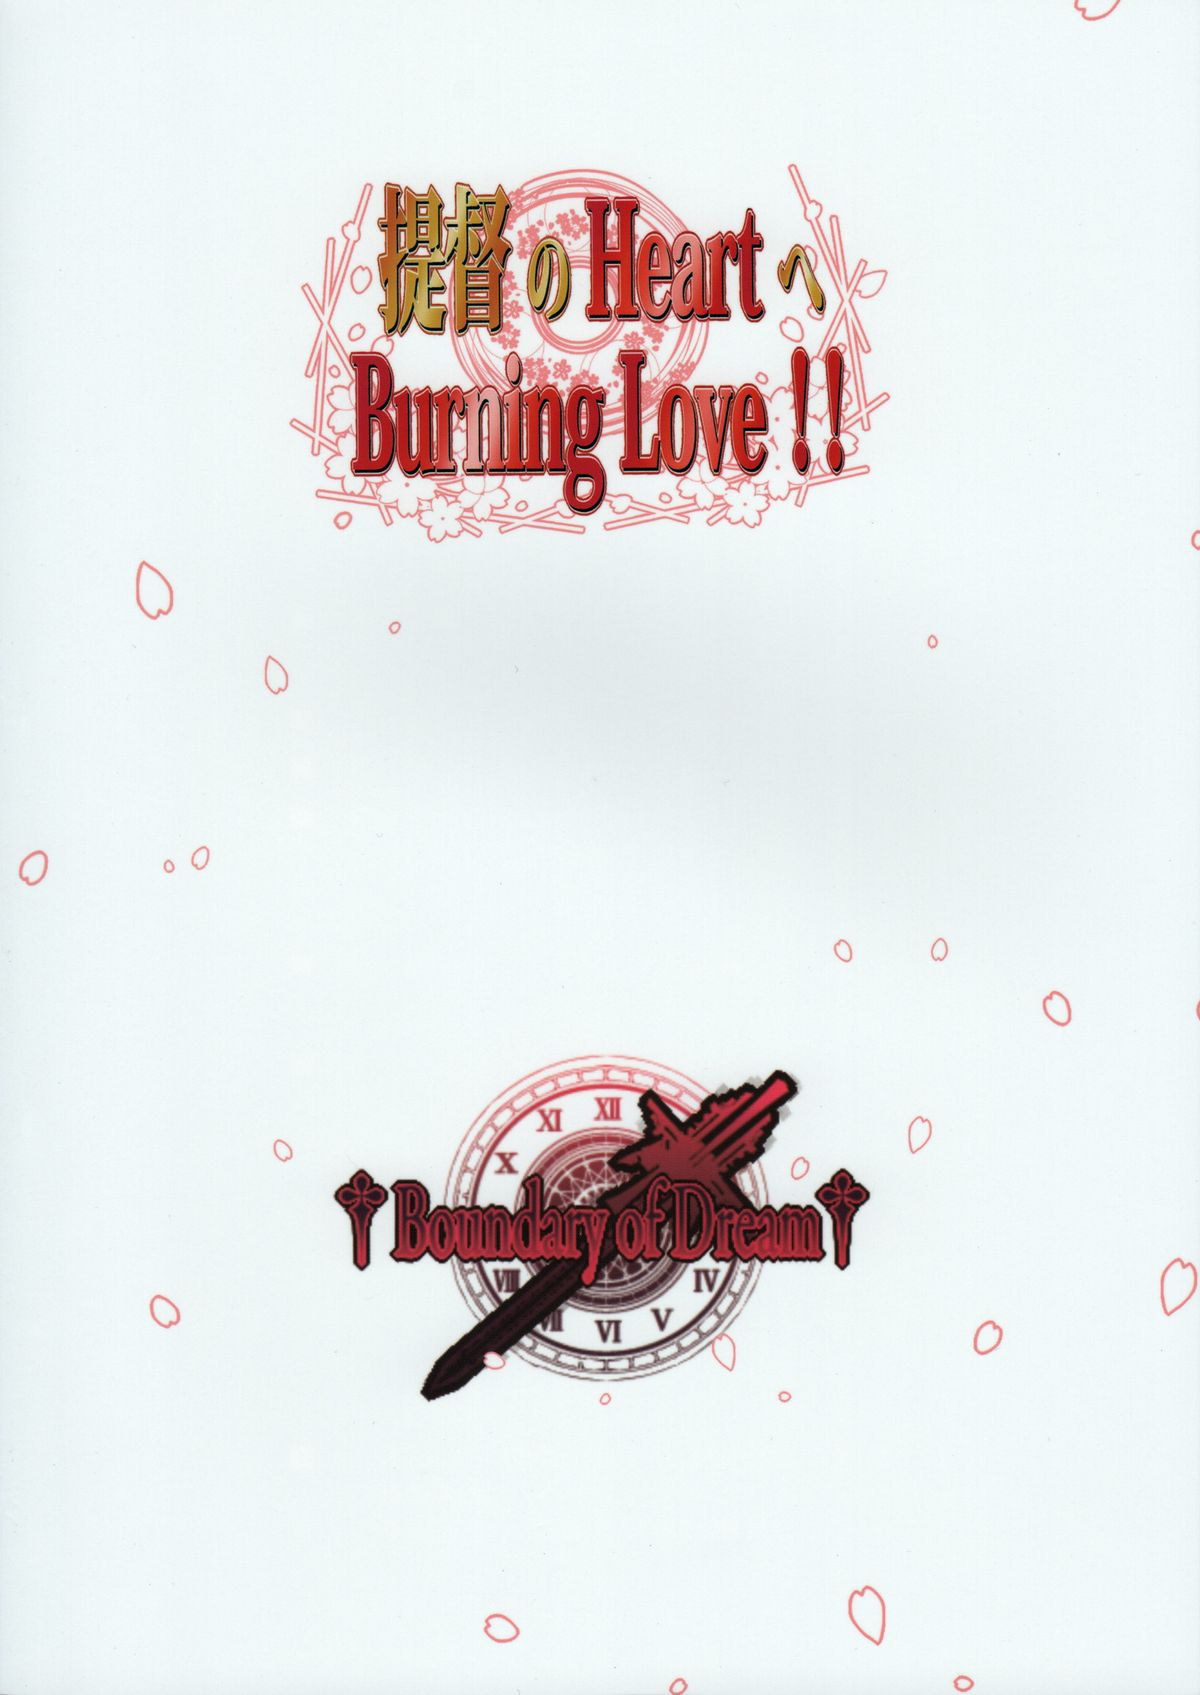 (C85) [Boundary of Dream (SuzuNeco)] 提督のHeartへBurning Love!! (艦隊これくしょん -艦これ-)